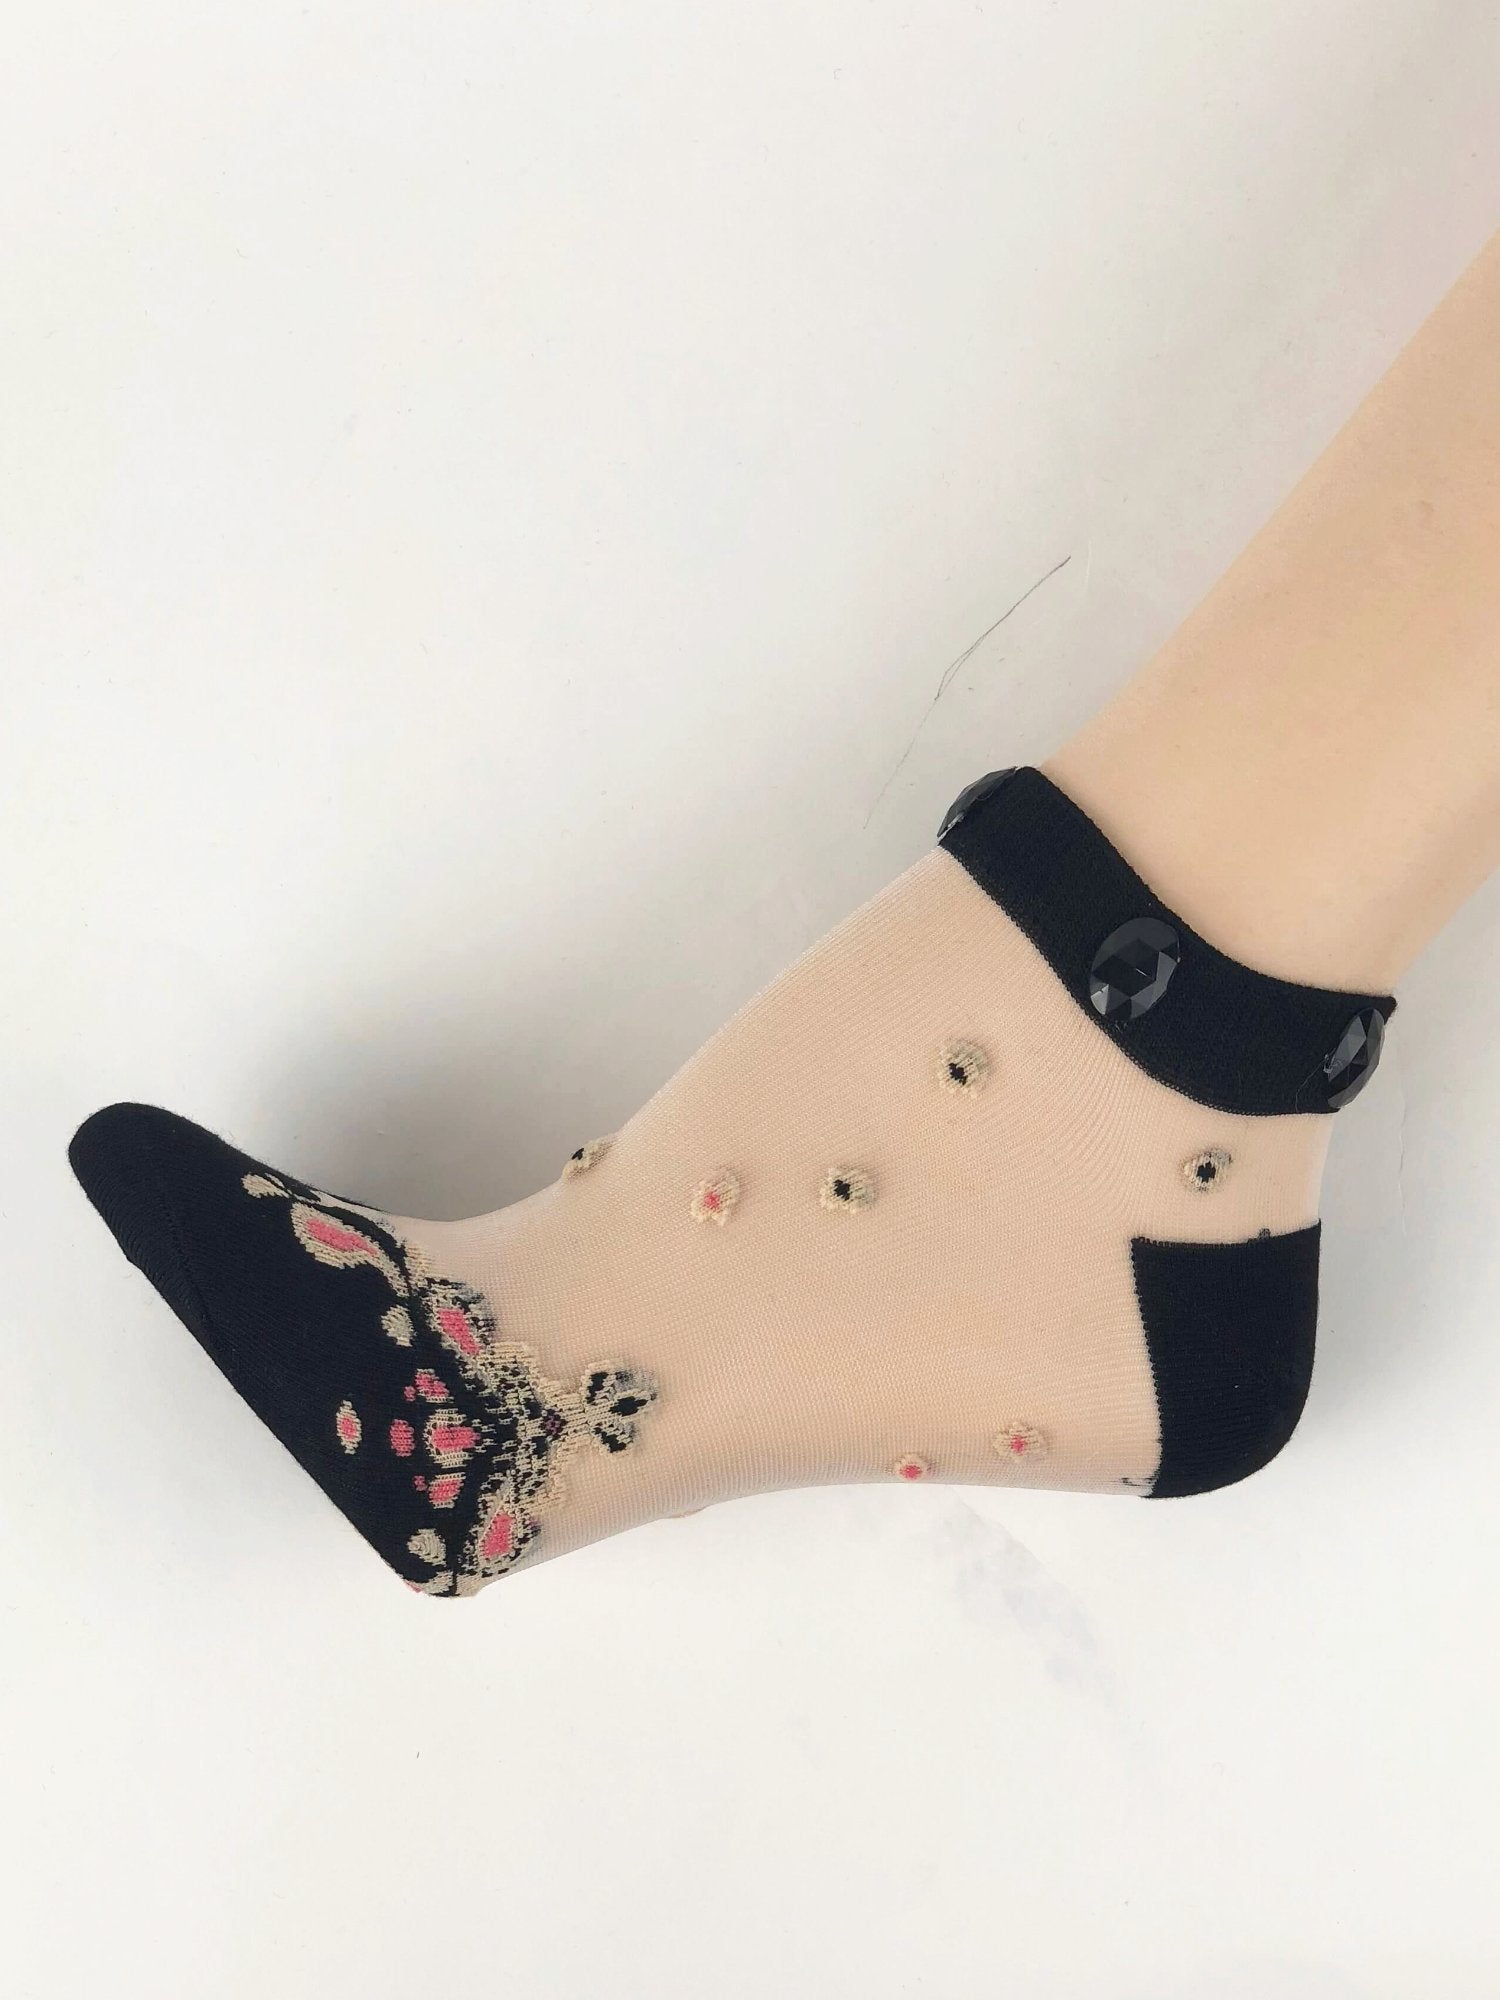 Pearled Black Patterned Sheer Socks - Global Trendz Fashion®